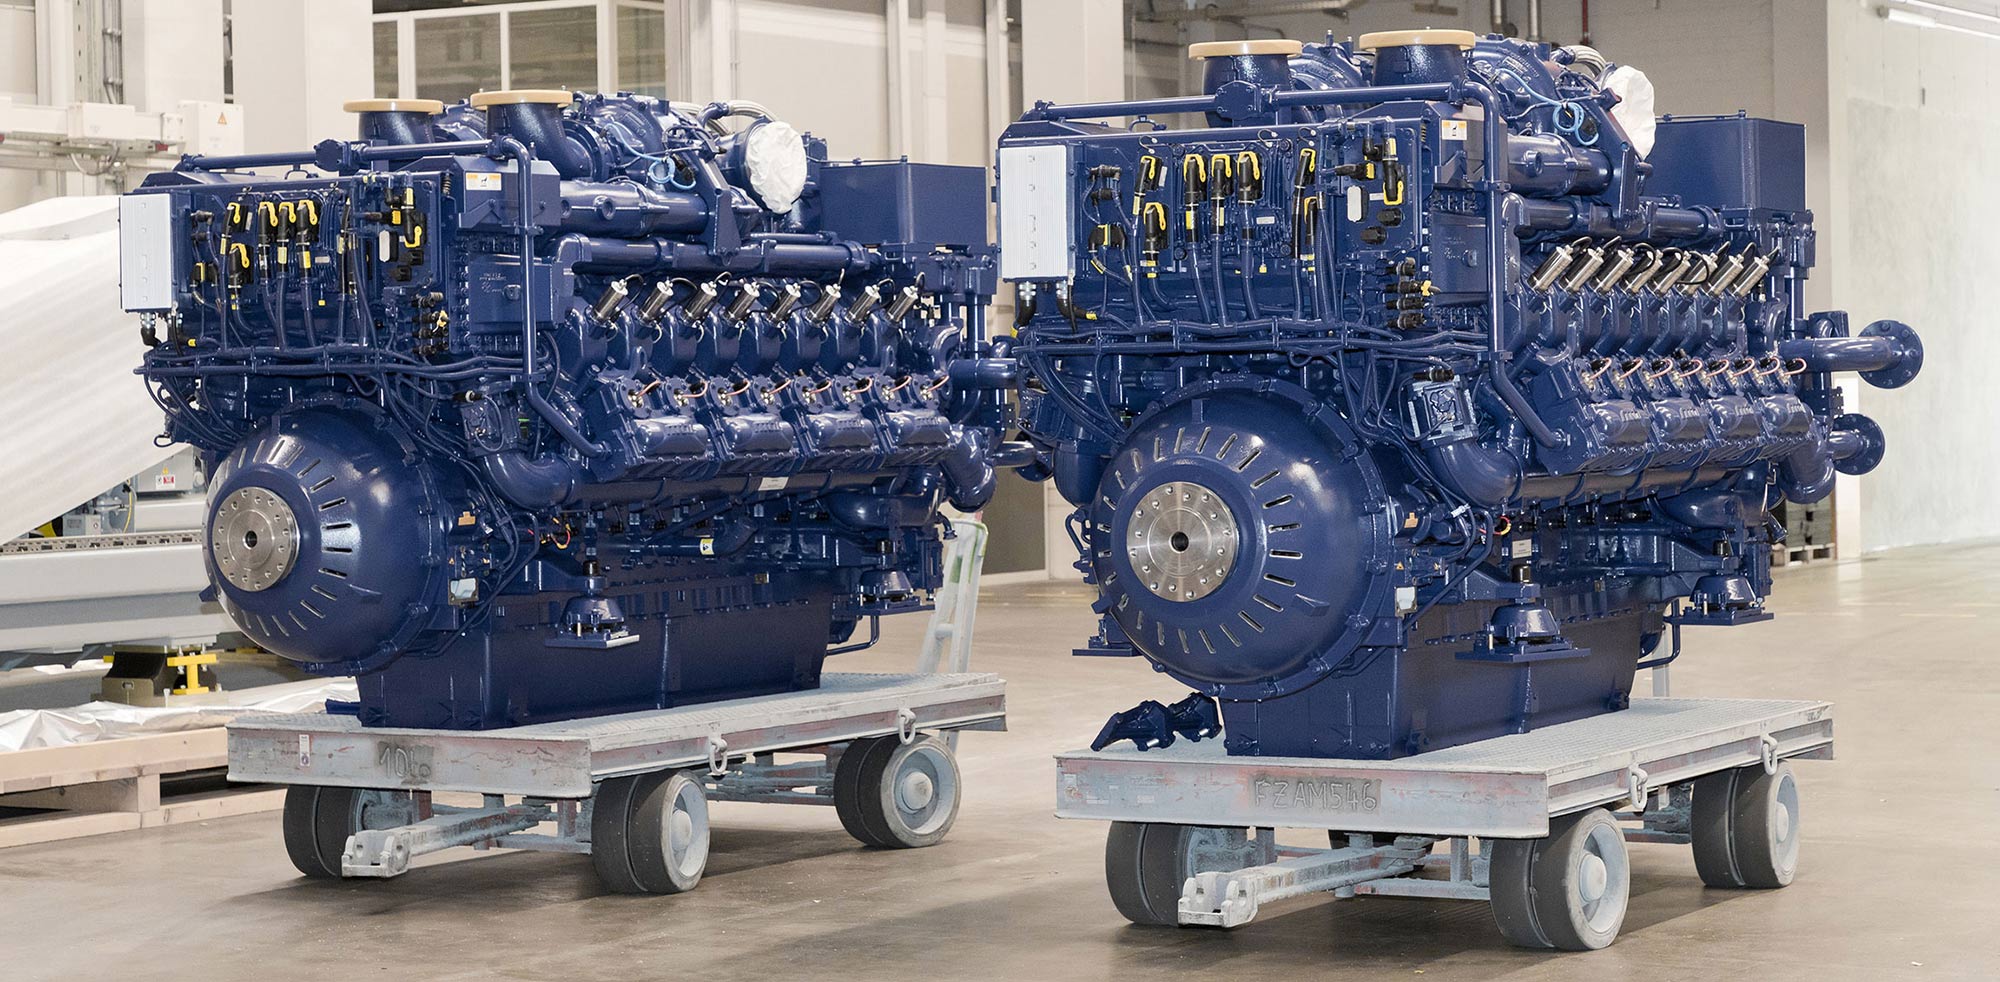 Two mtu 16V4000M55RN gas engines power the world's first hybrid tug. 